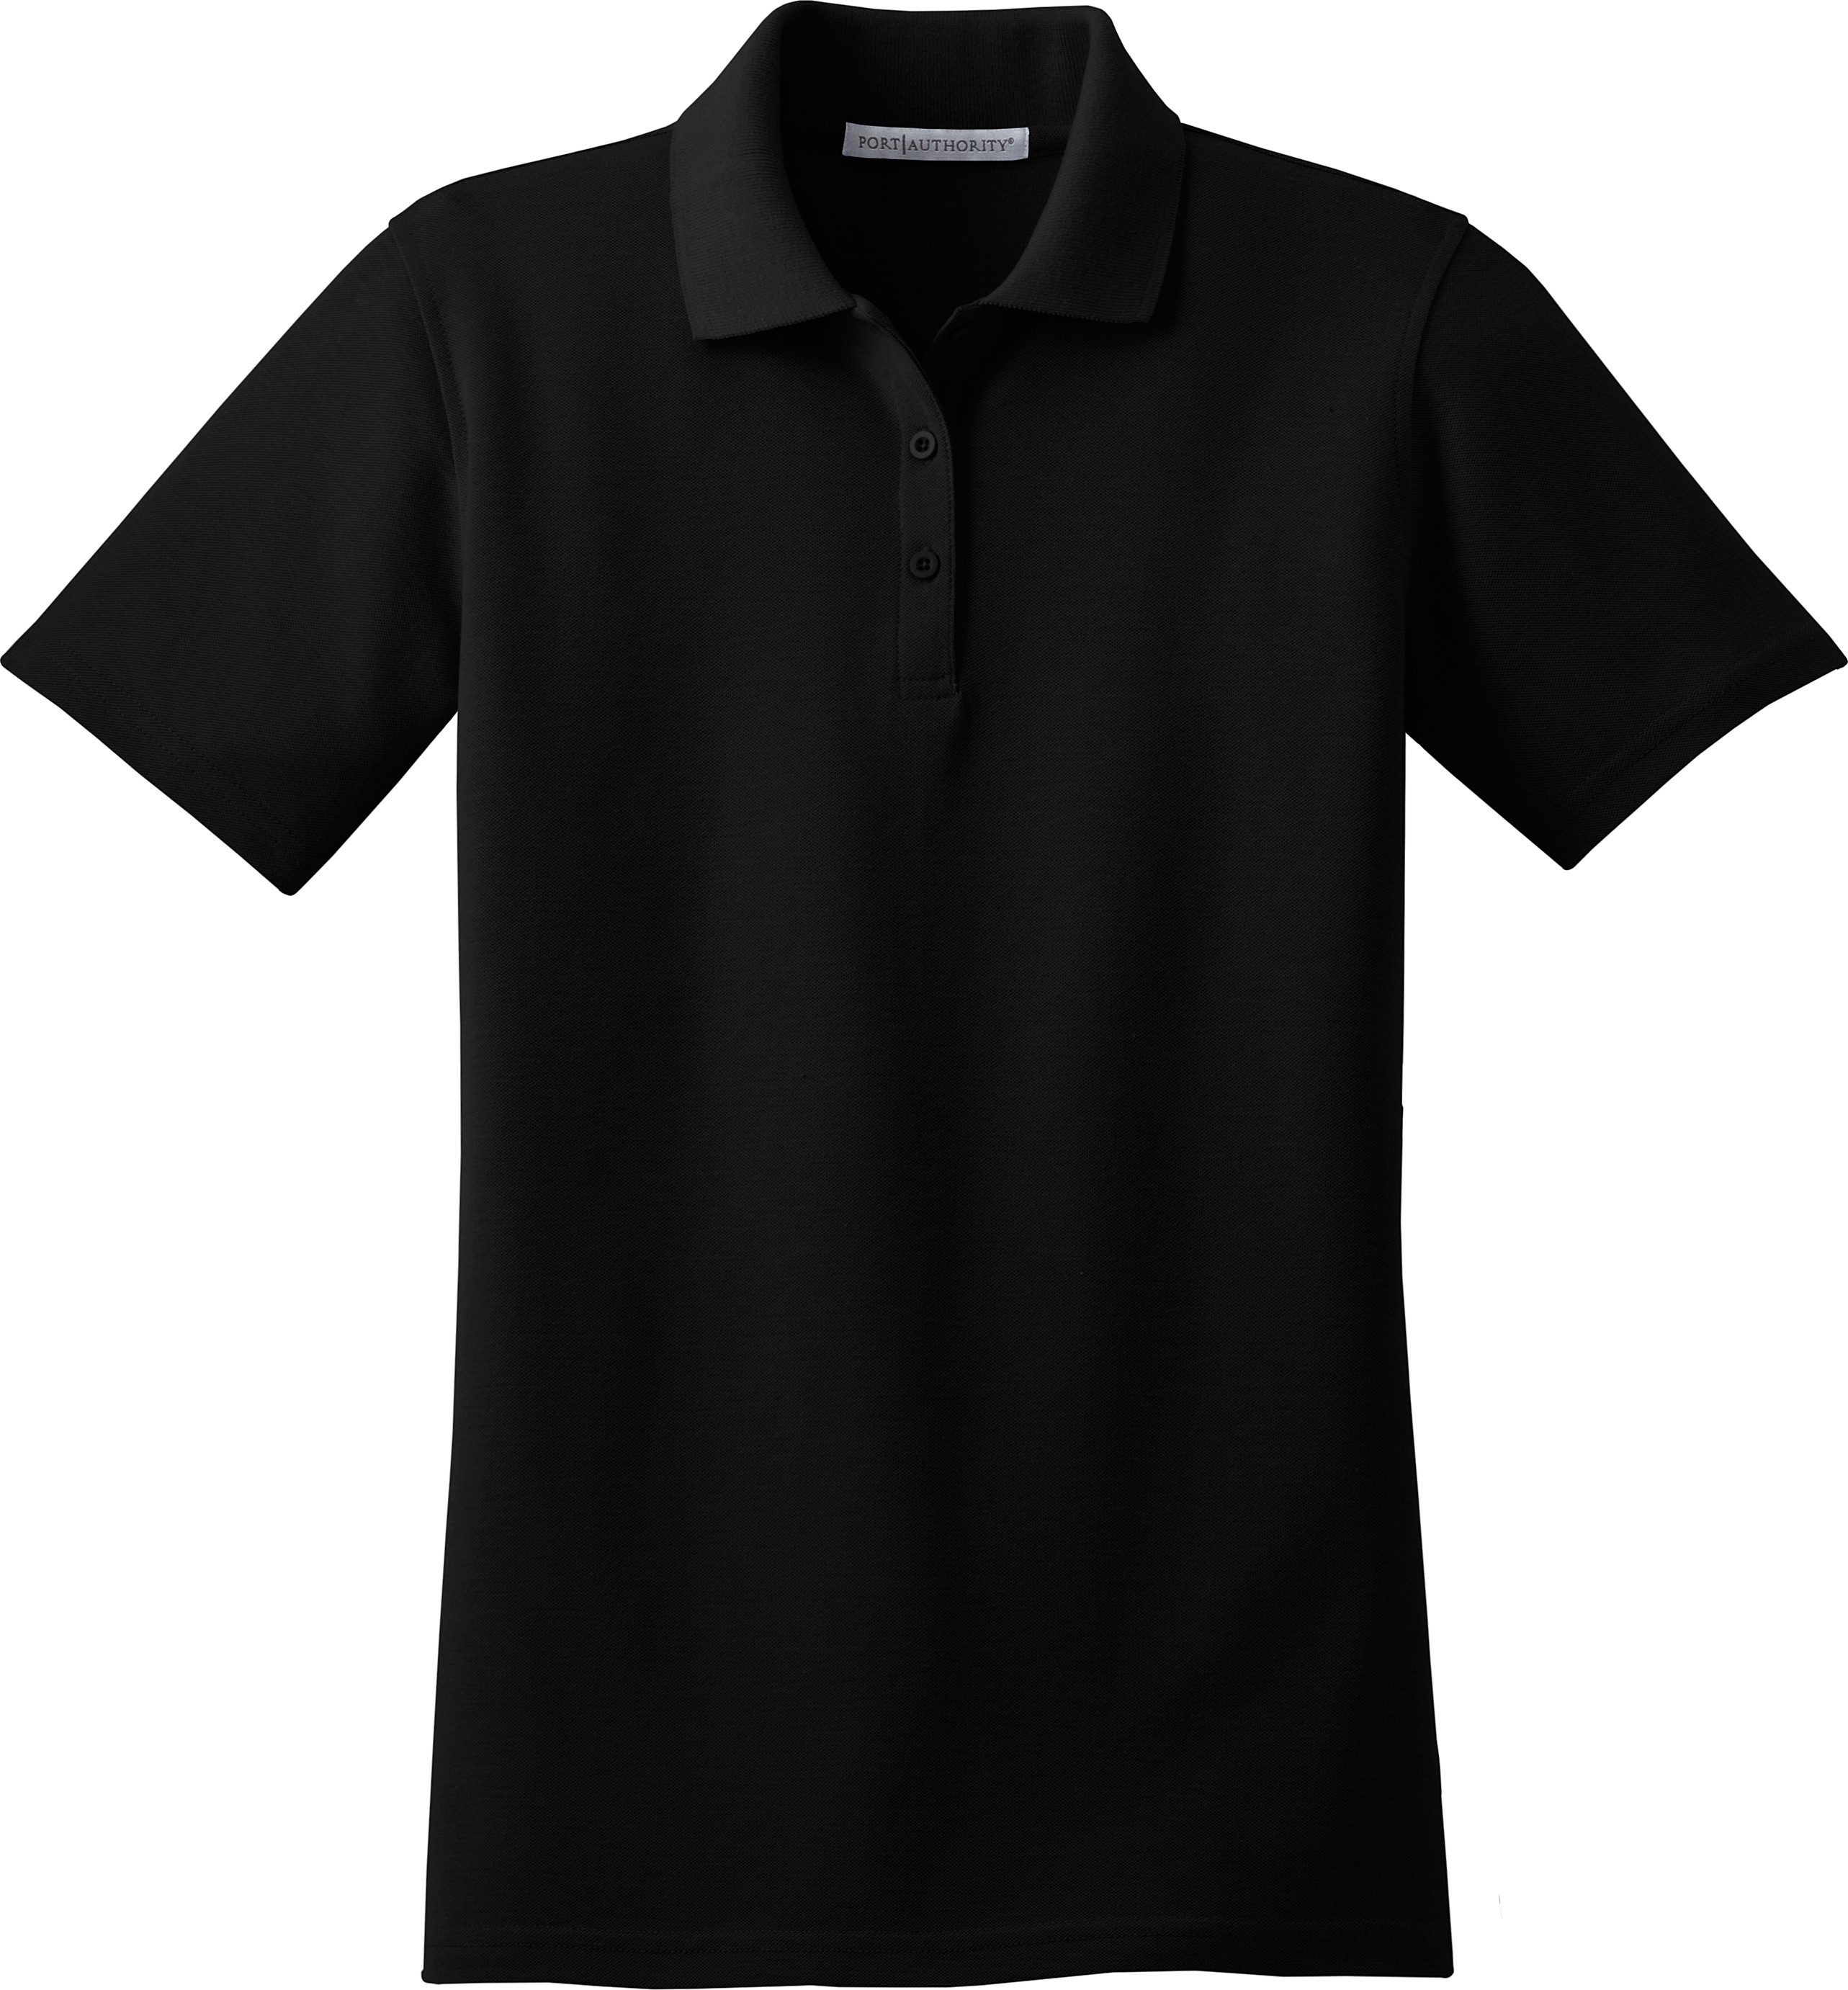 Black Polo Shirt Template   Clipart Best